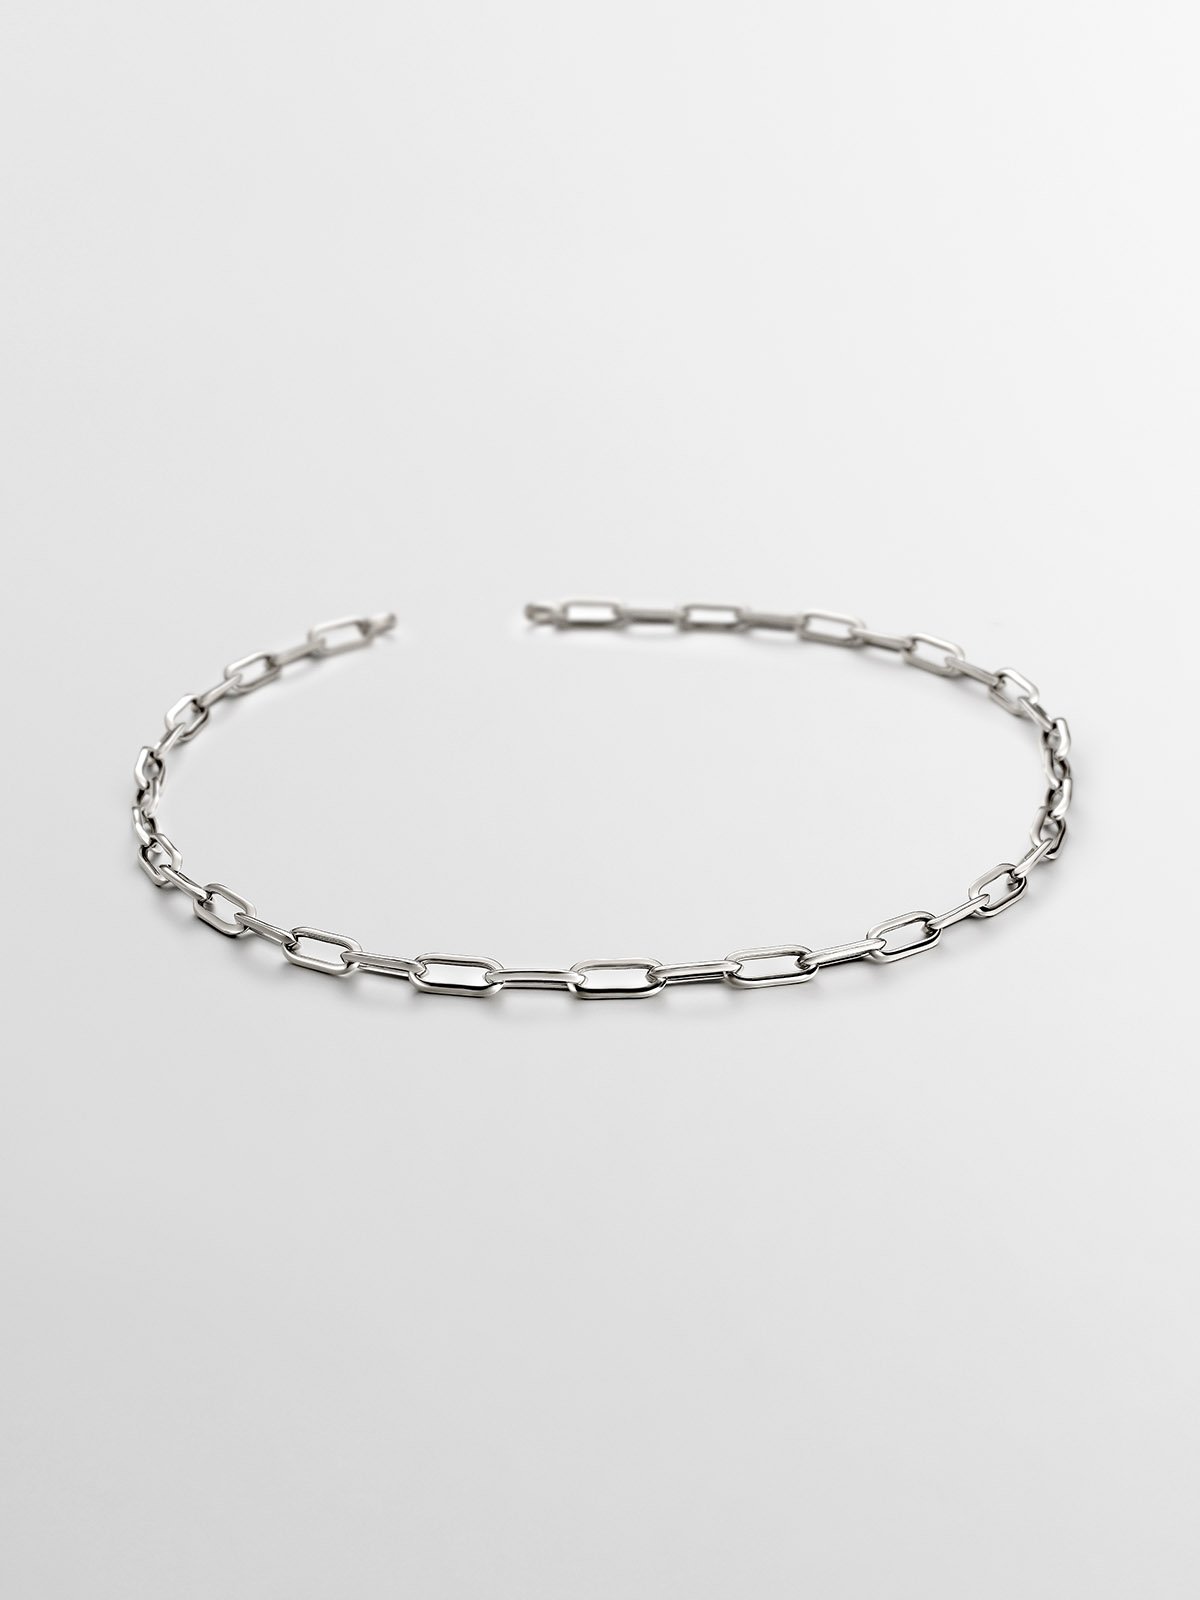 925 Silver rectangular link chain